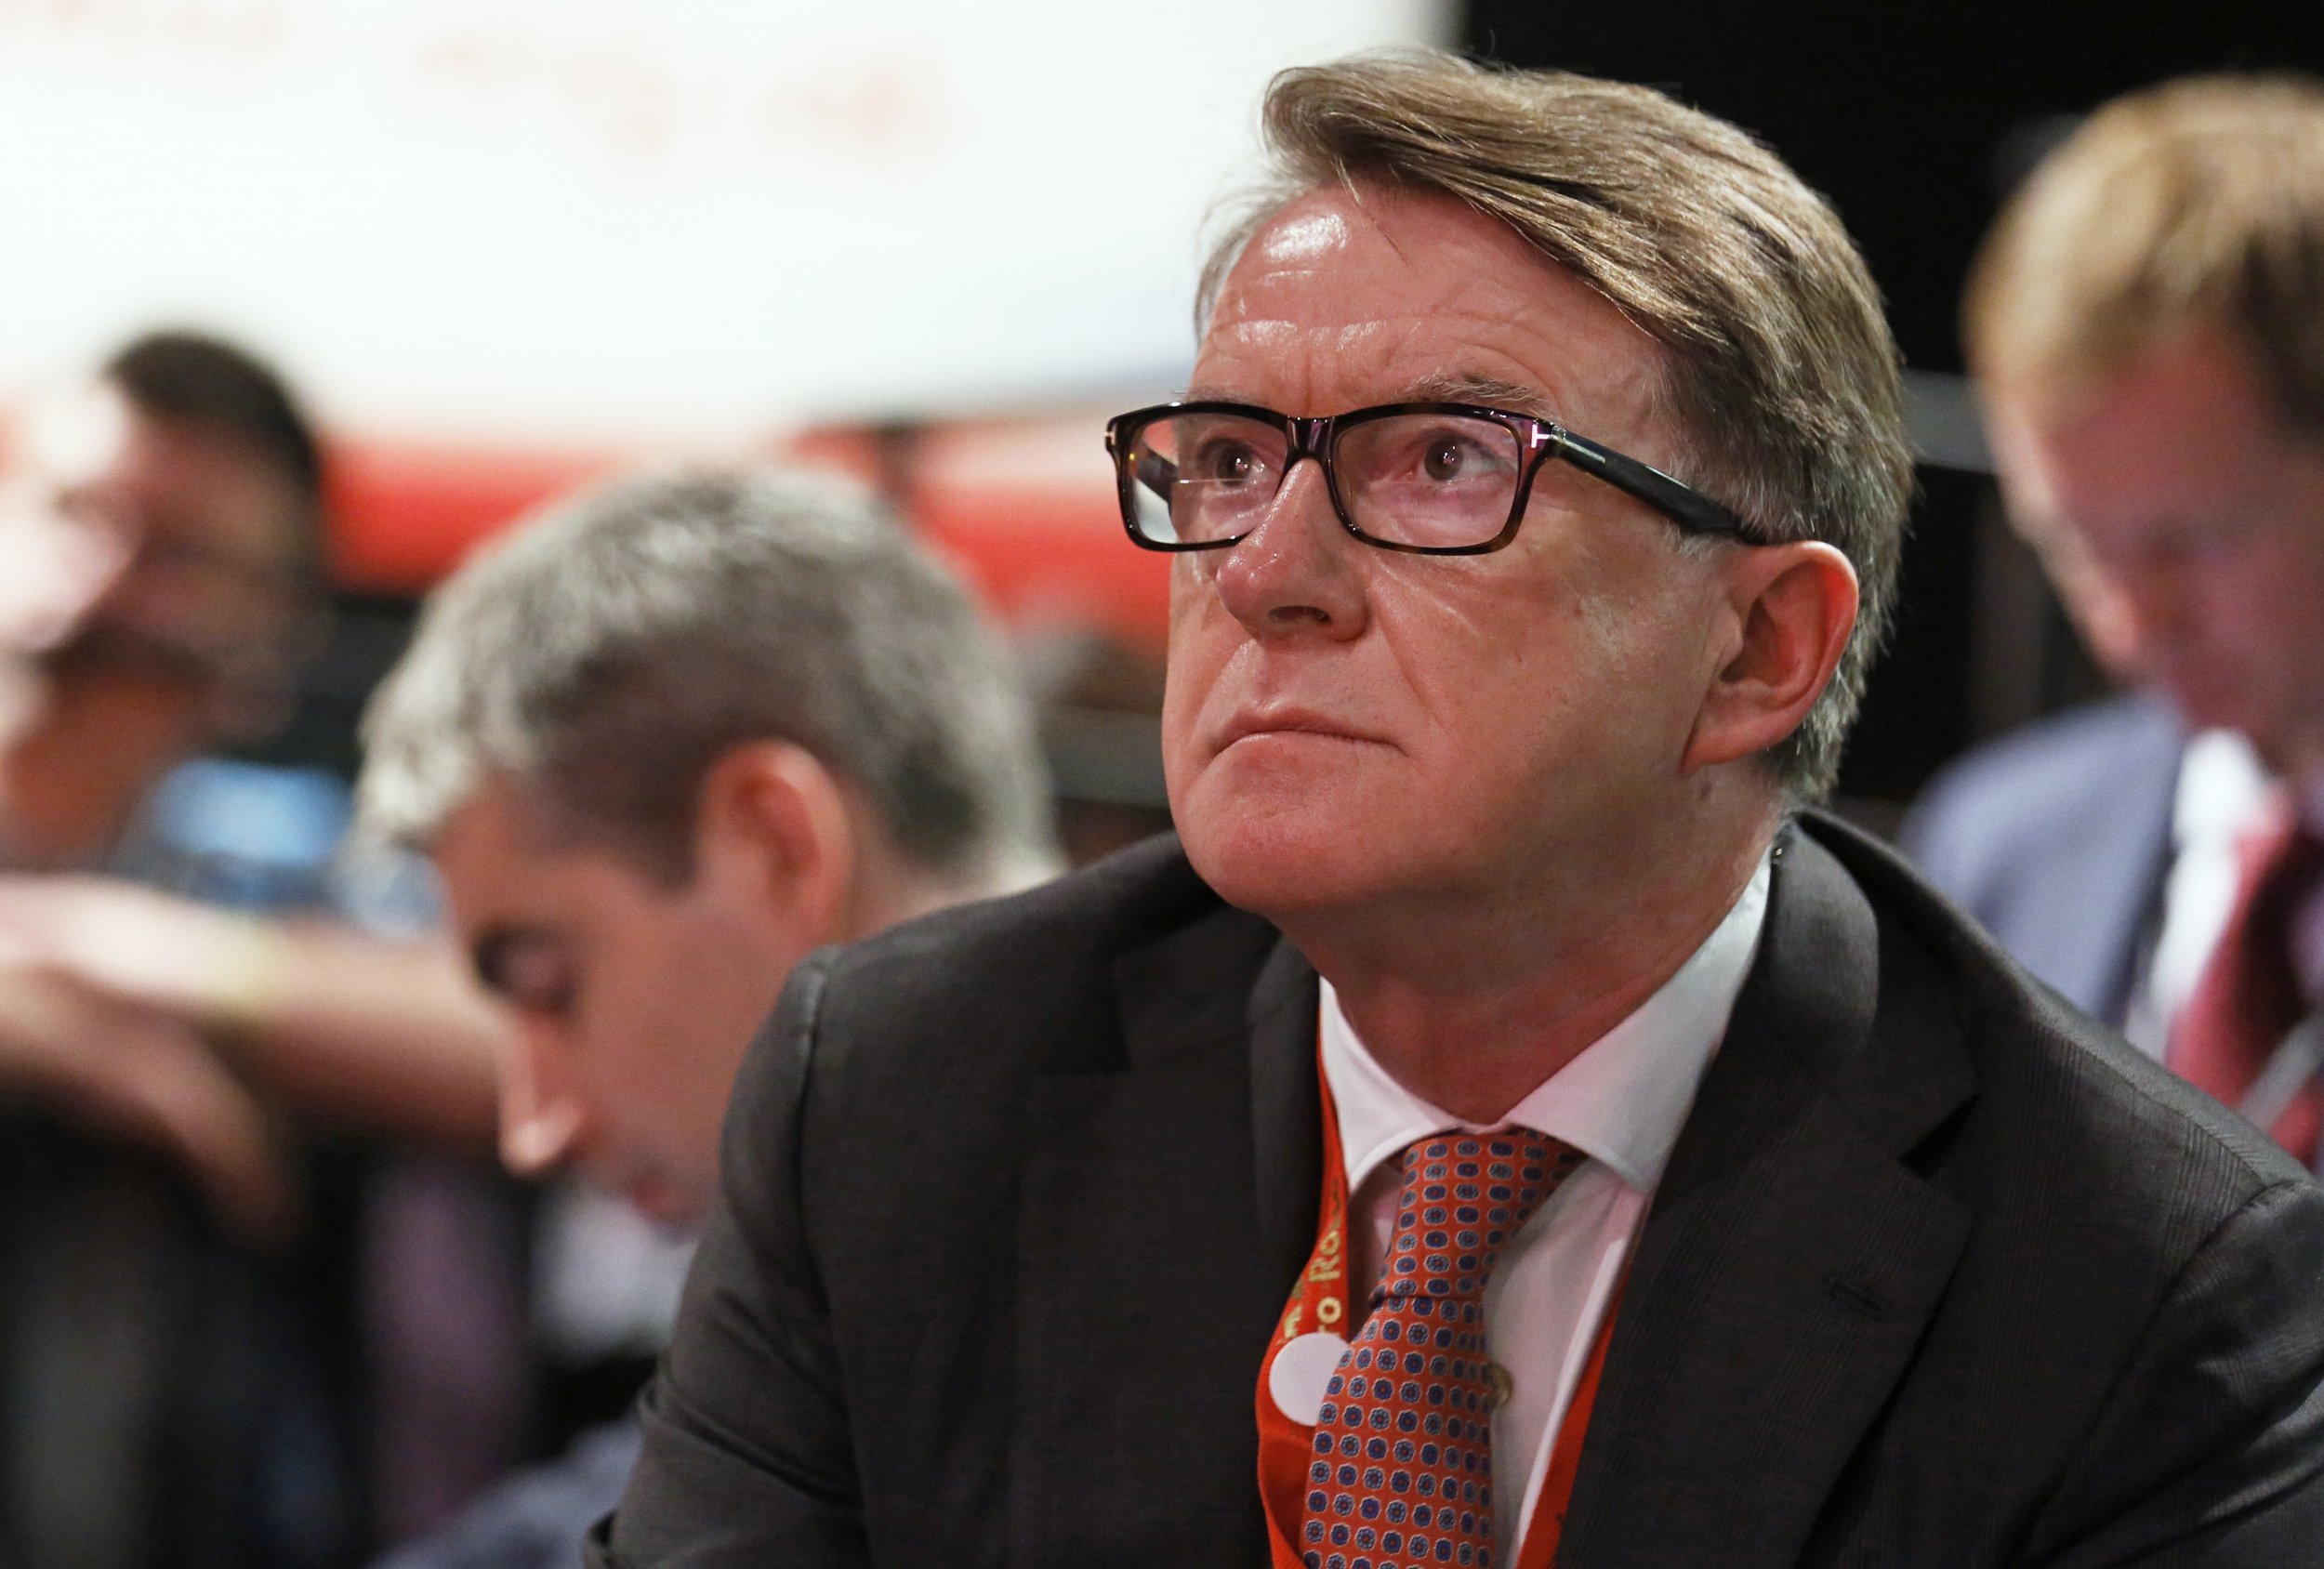 Peter Mandelson